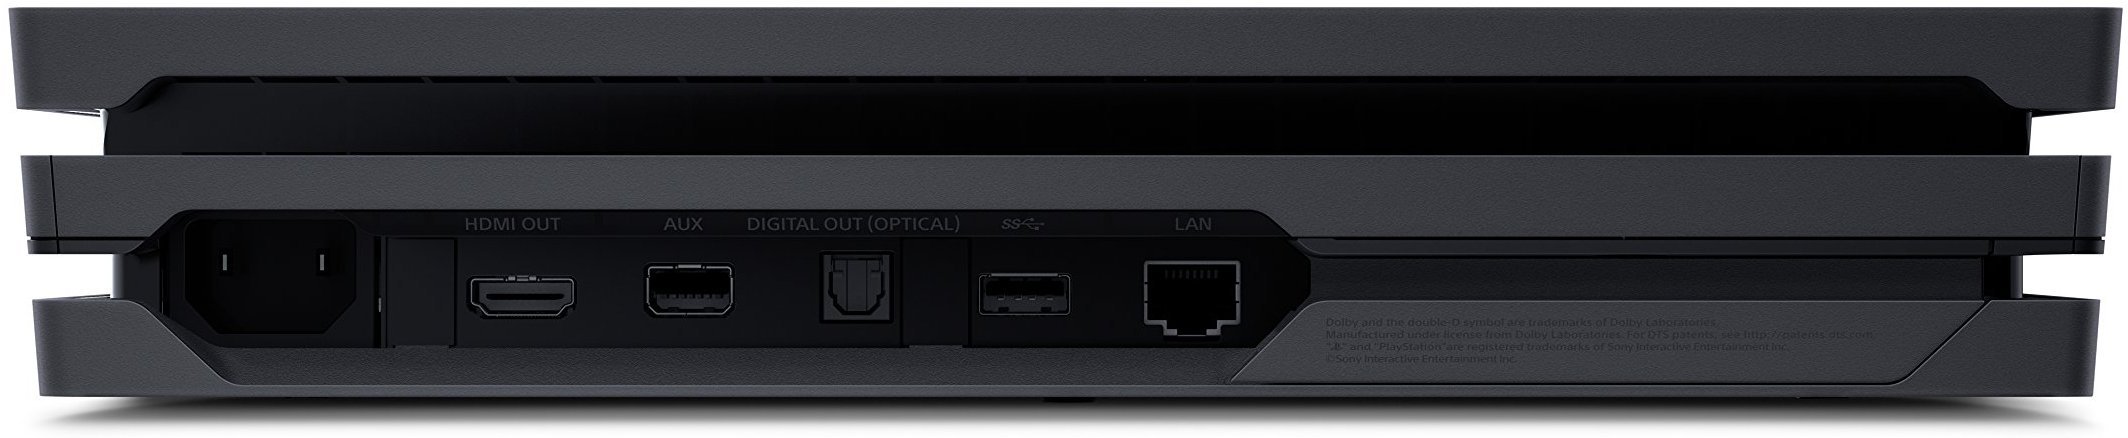 Sony PlayStation 4 PRO 1TB Gaming Console - Black (Renewed)